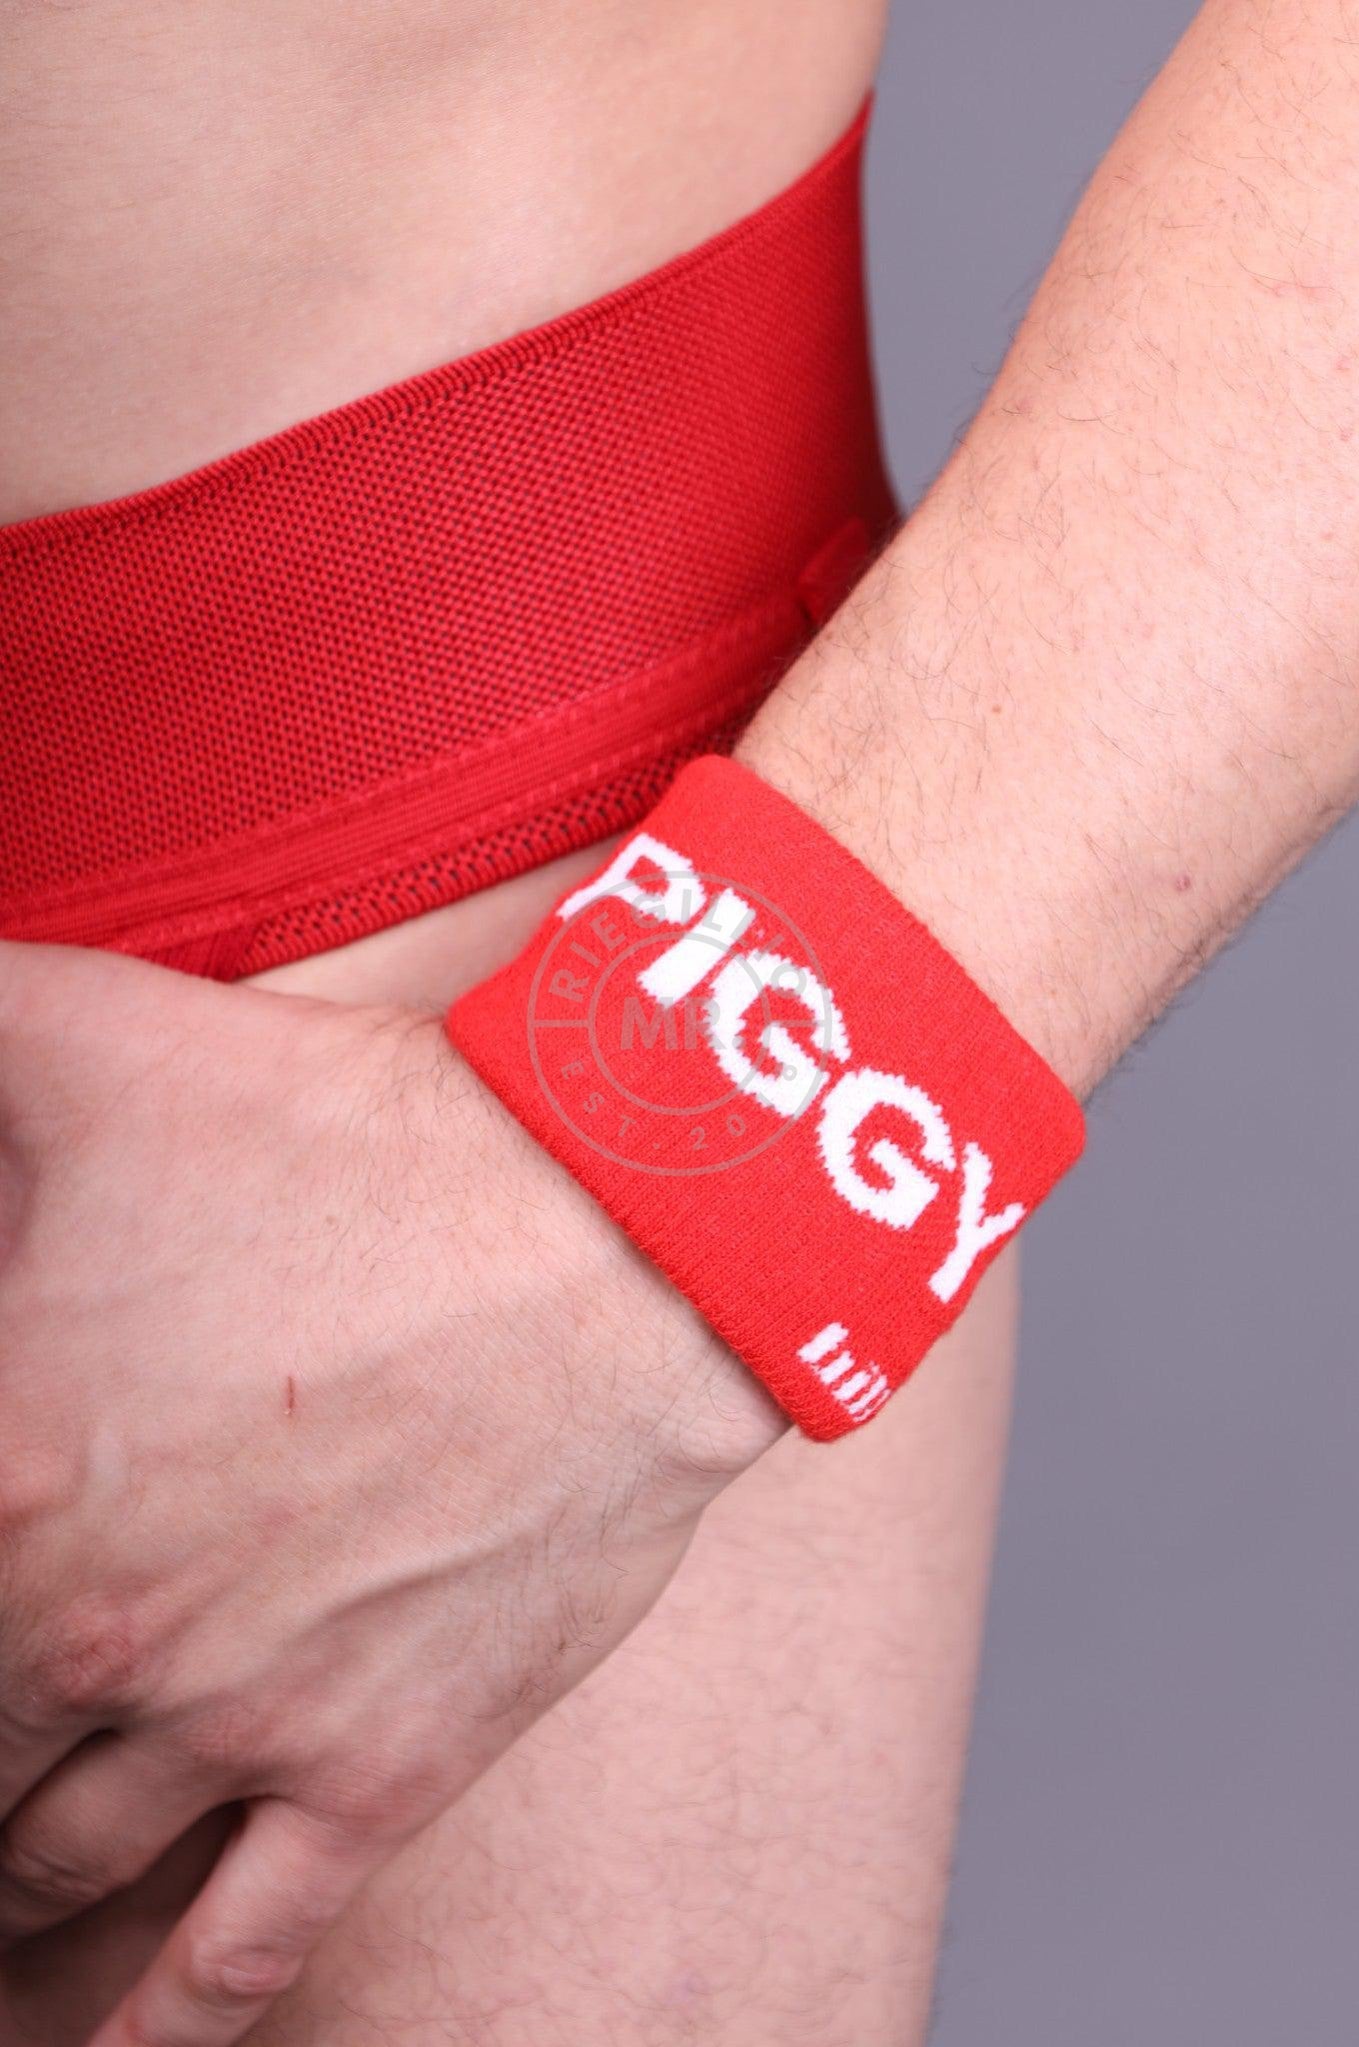 Barcode Identity Wrist Band Piggy at MR. Riegillio